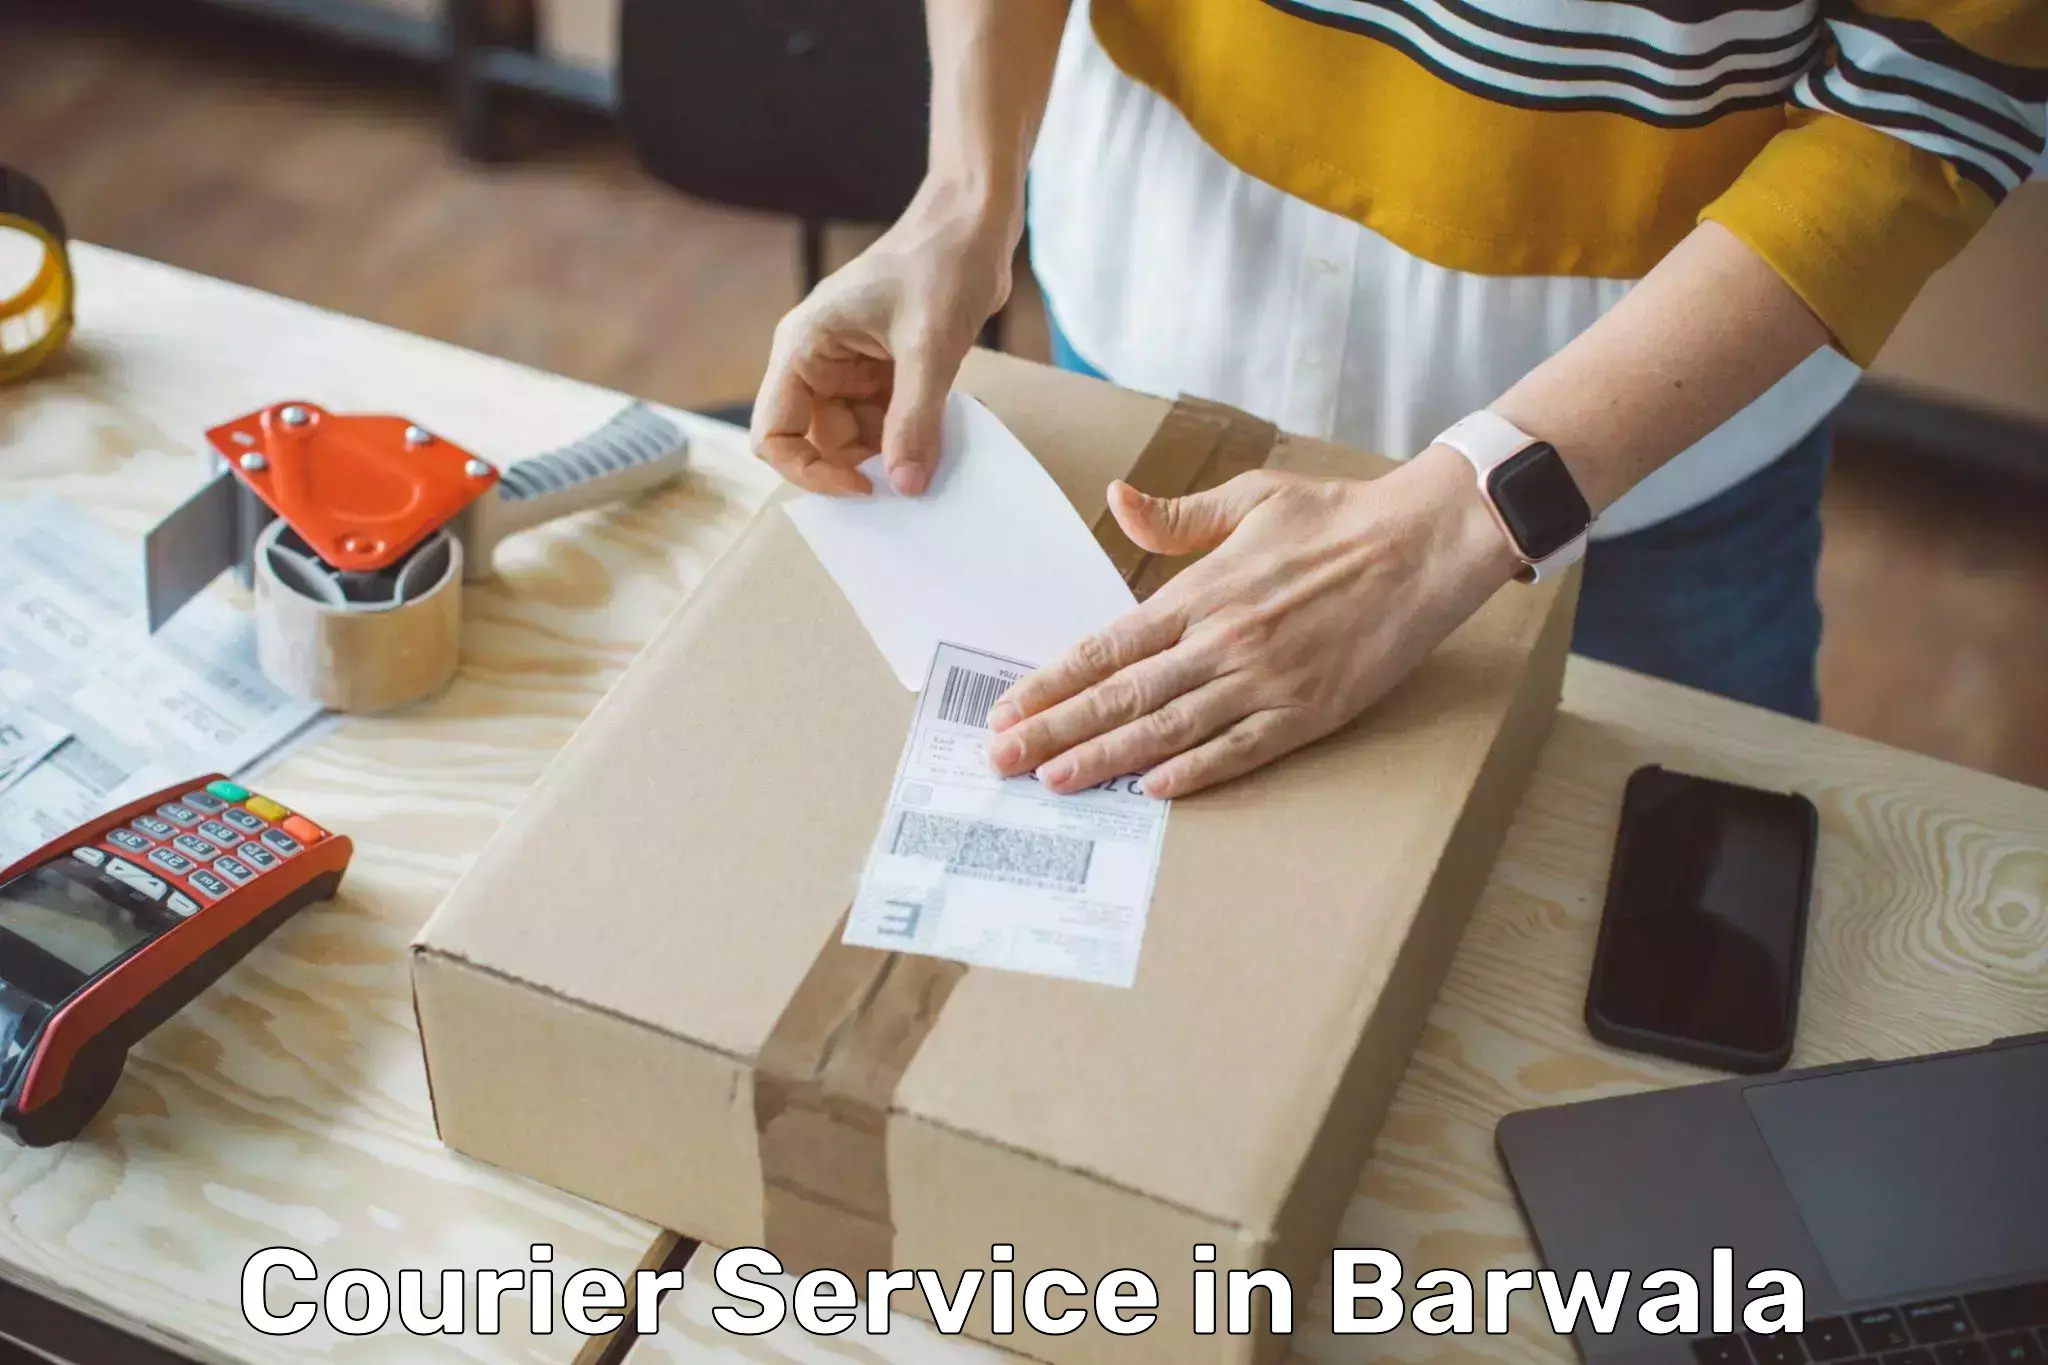 Flexible delivery scheduling in Barwala